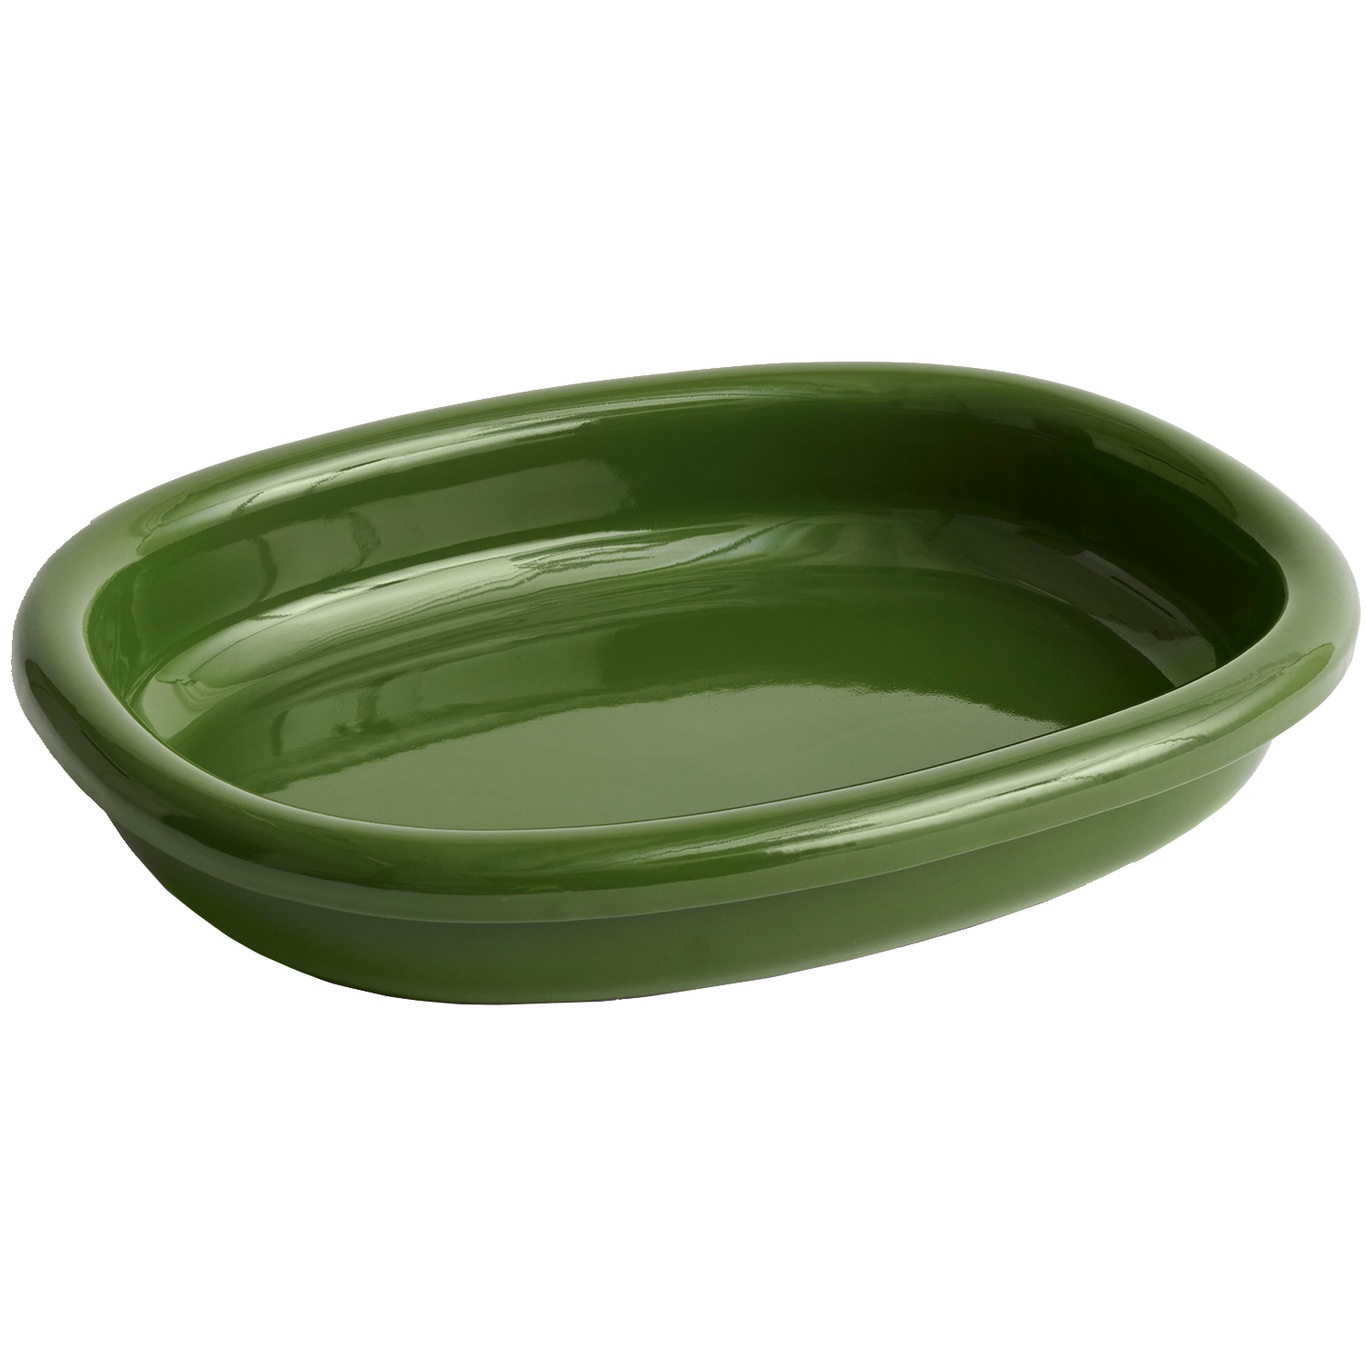 Barro Dish Large, Green